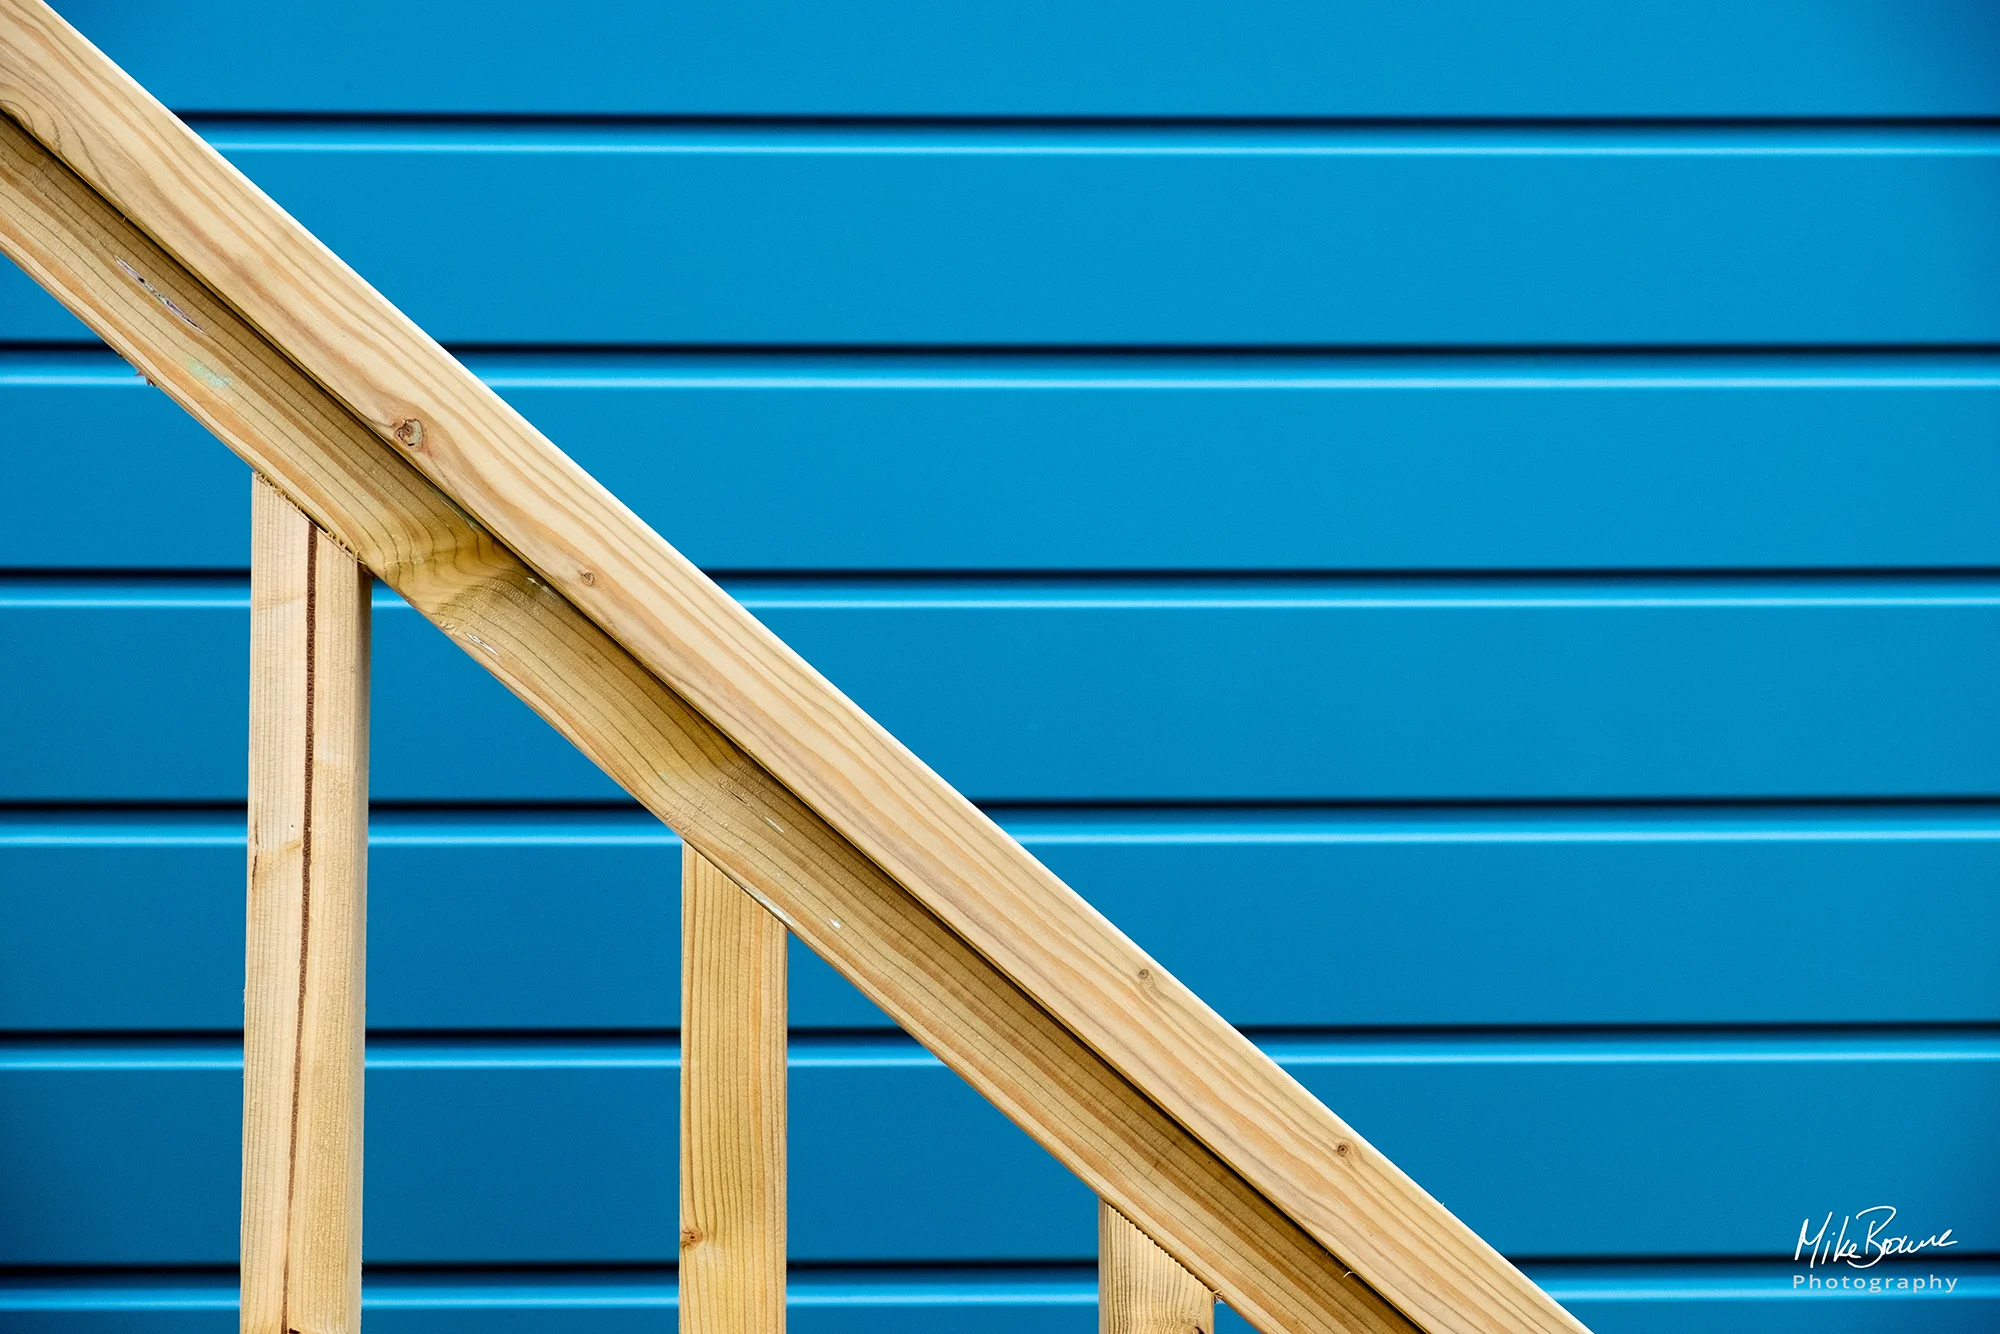 Wooden hand rail on side of a blue beach hut